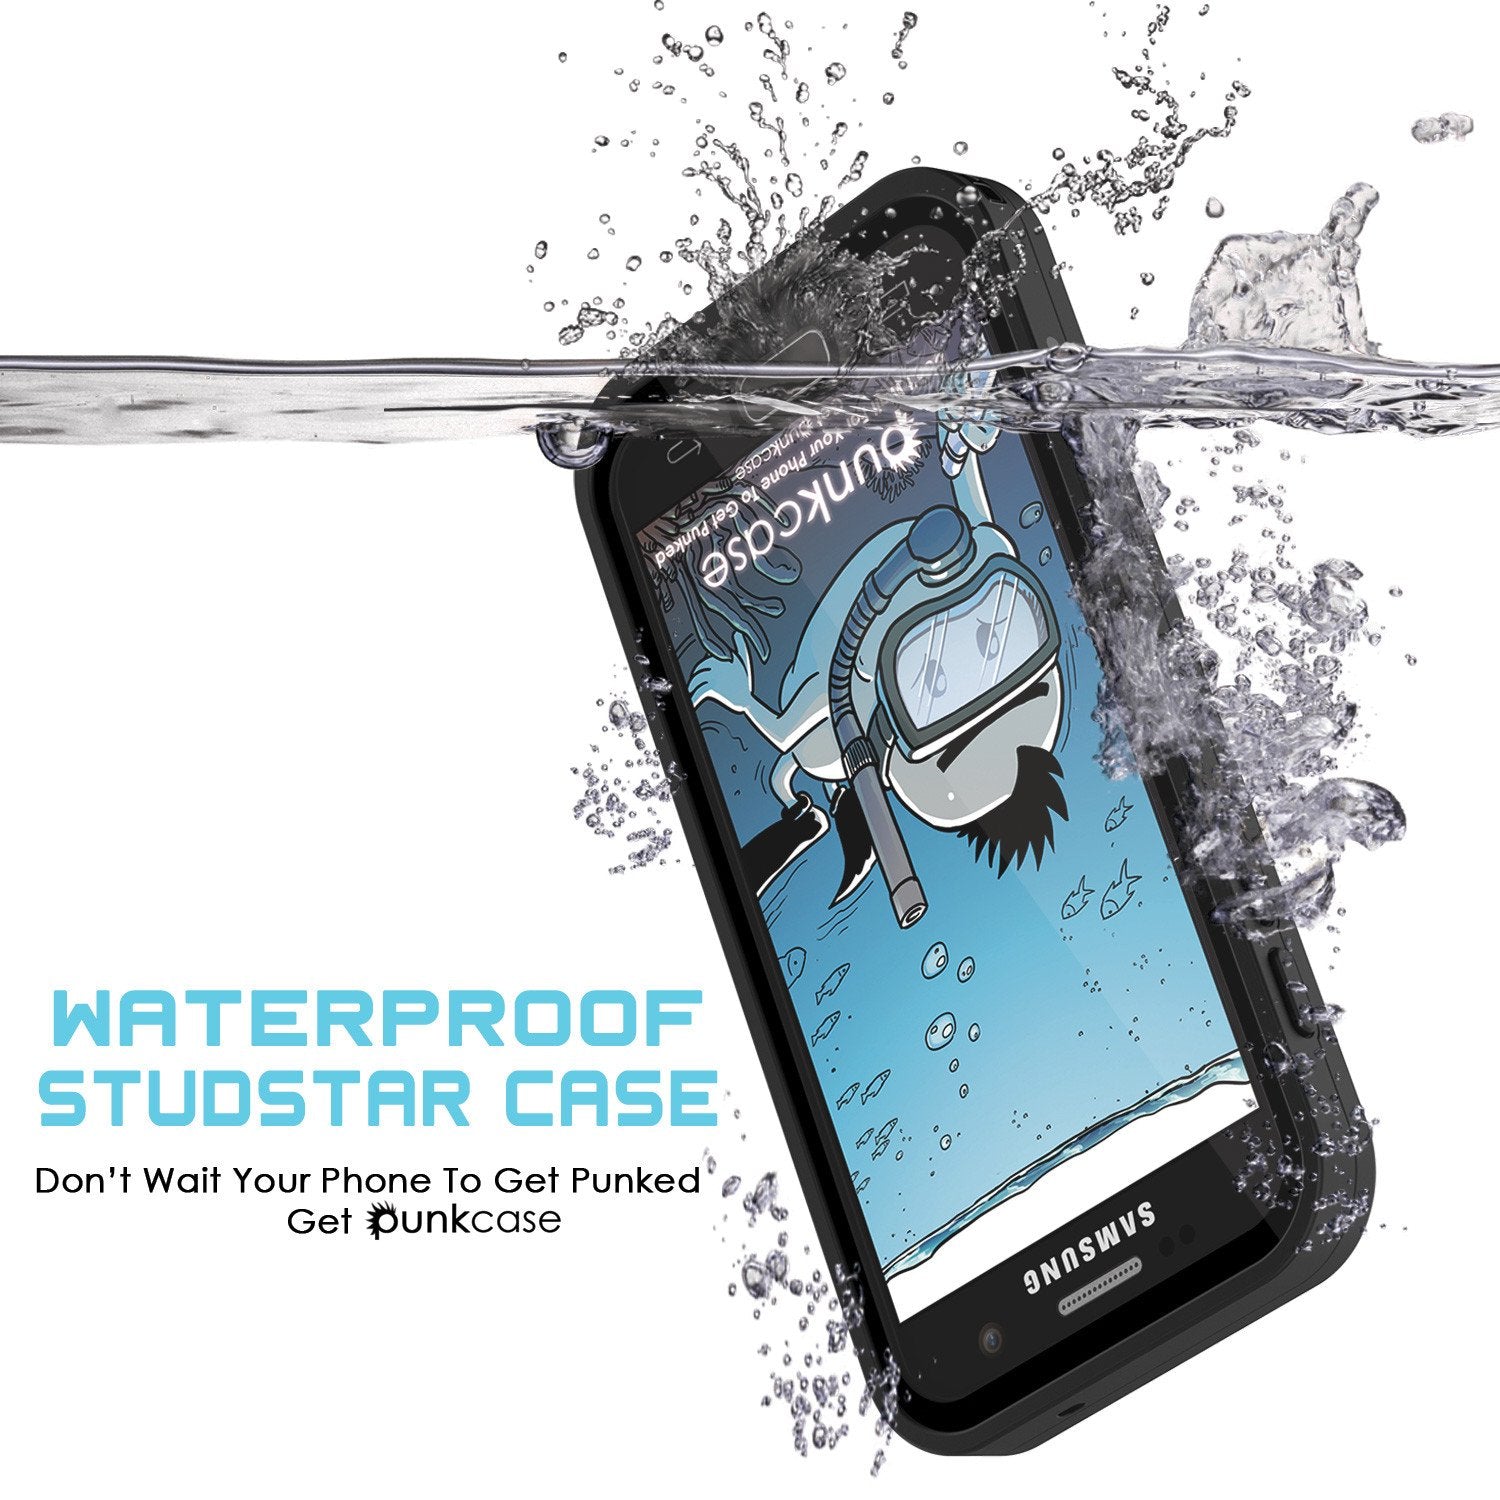 Galaxy S7 Waterproof Case PunkCase StudStar Black Thin 6.6ft Underwater IP68 Shock/Dirt/Snow Proof